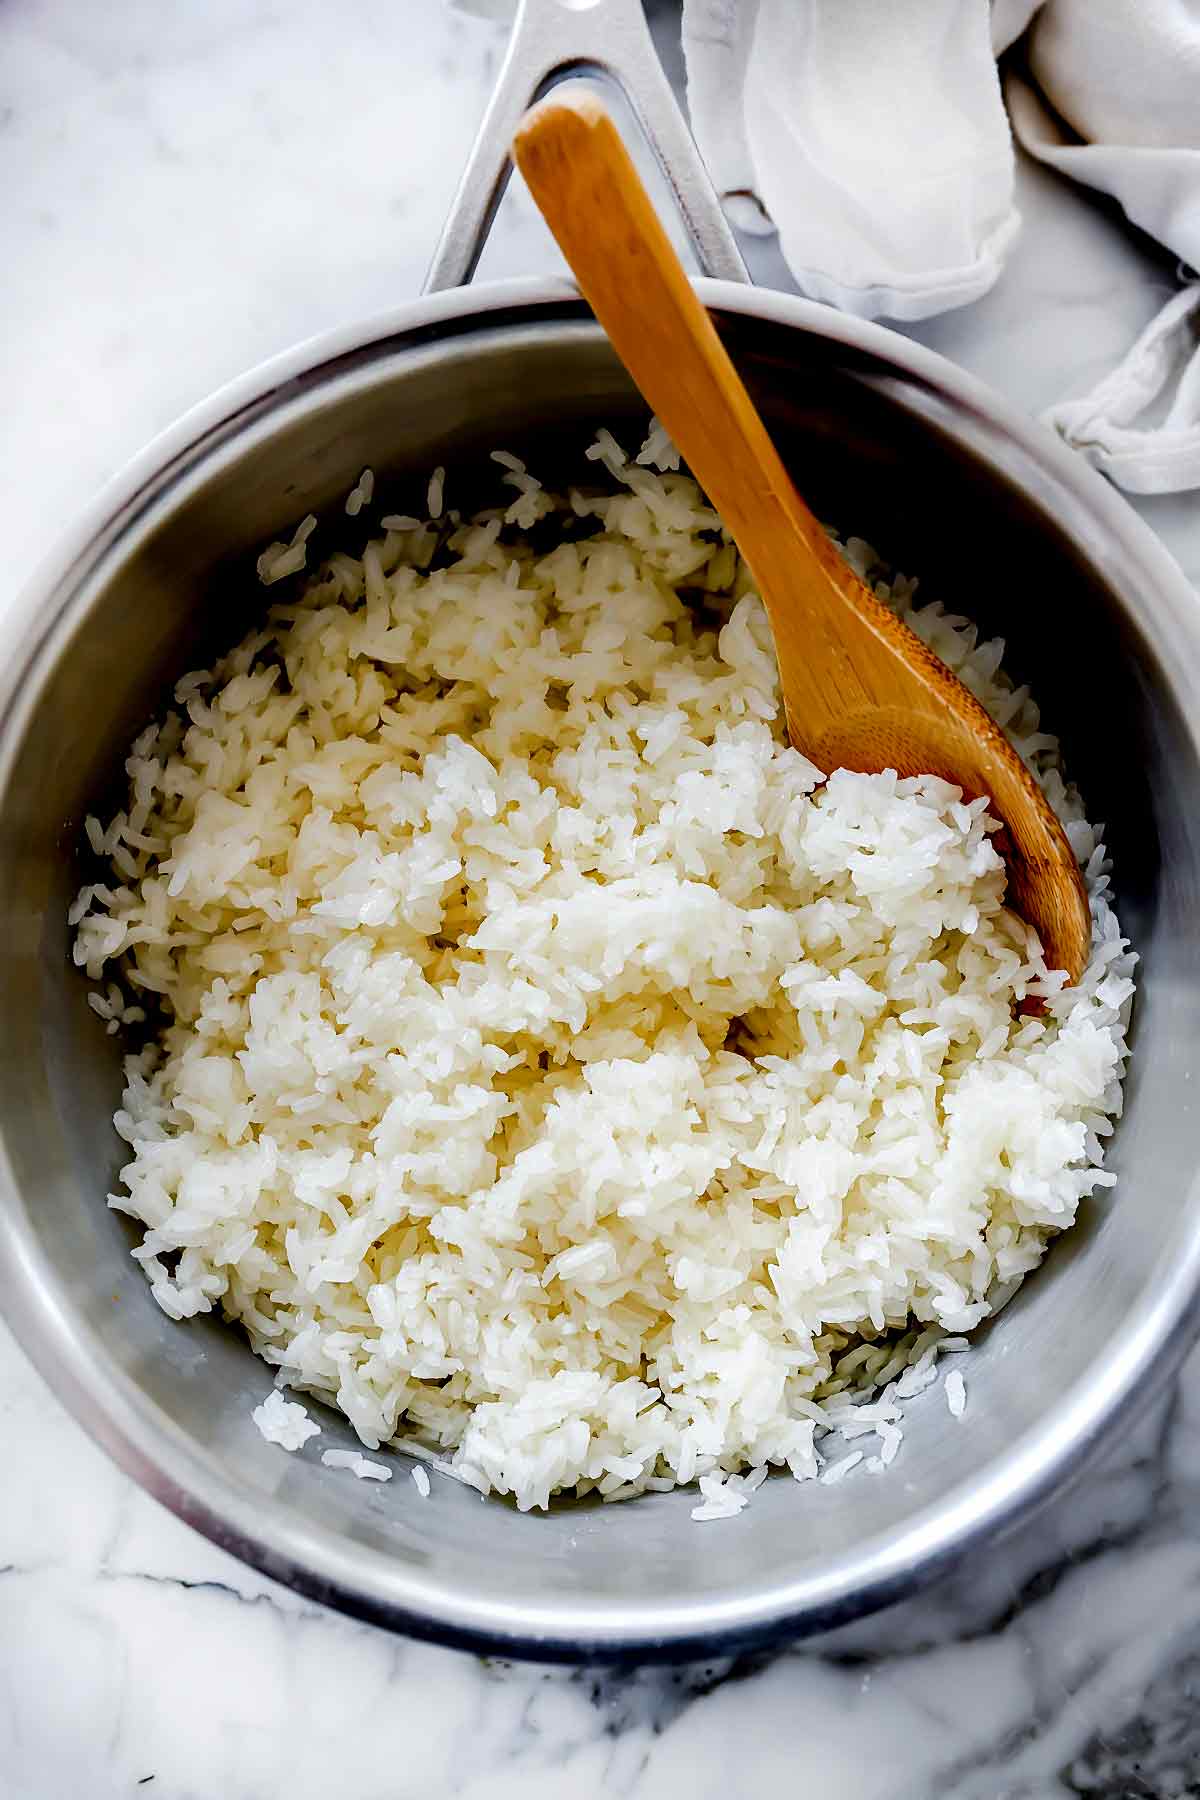 https://www.foodiecrush.com/creamy-lemon-chicken-breasts-mushrooms/how-to-make-cook-rice-foodiecrush-com-010/